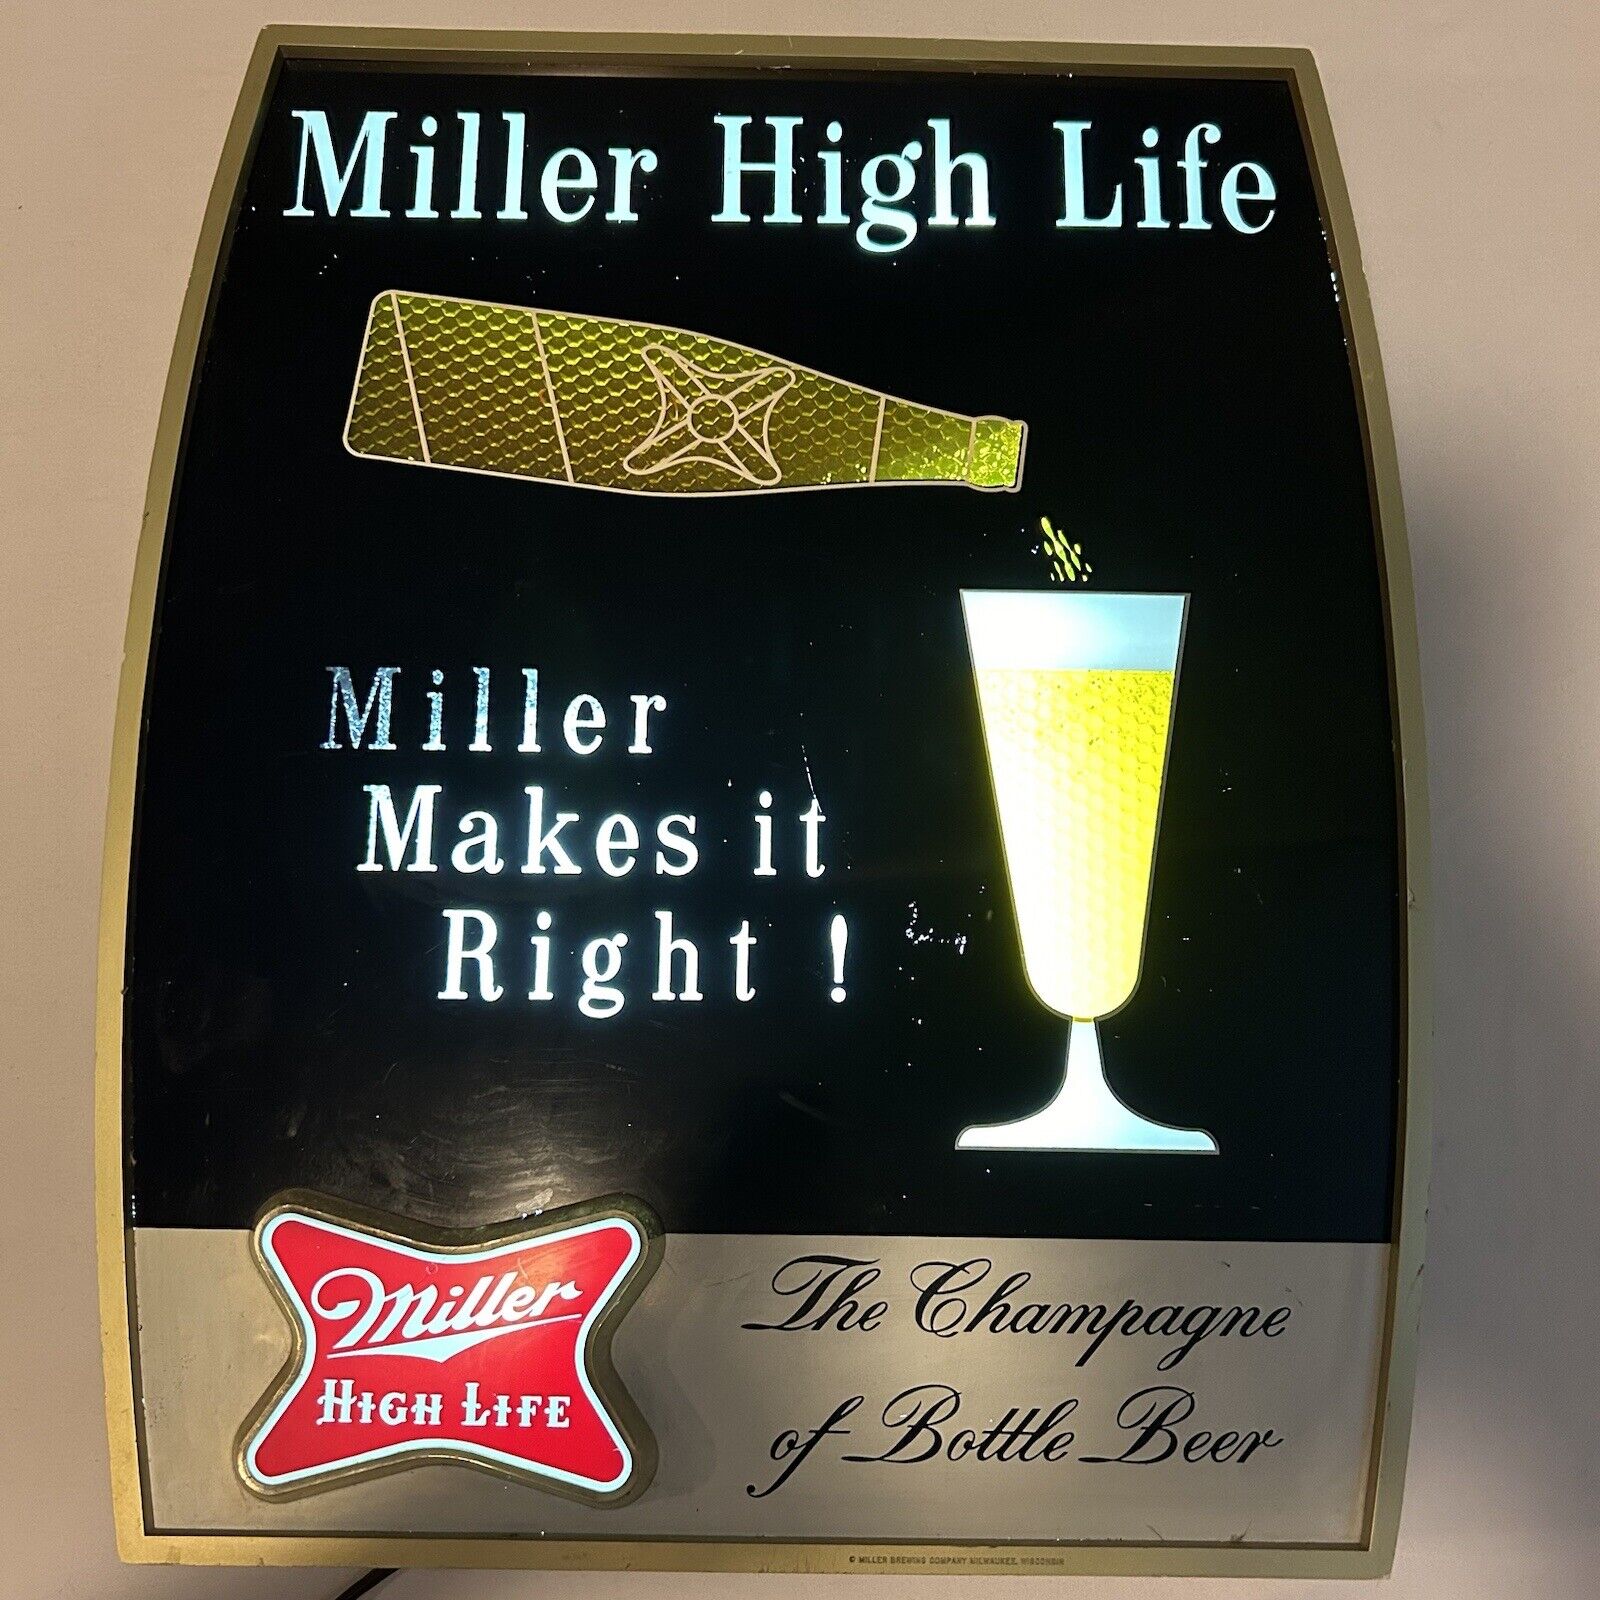 Rare Vintage Miller High Life Pouring Beer Motion Lighted Sign - Works Great